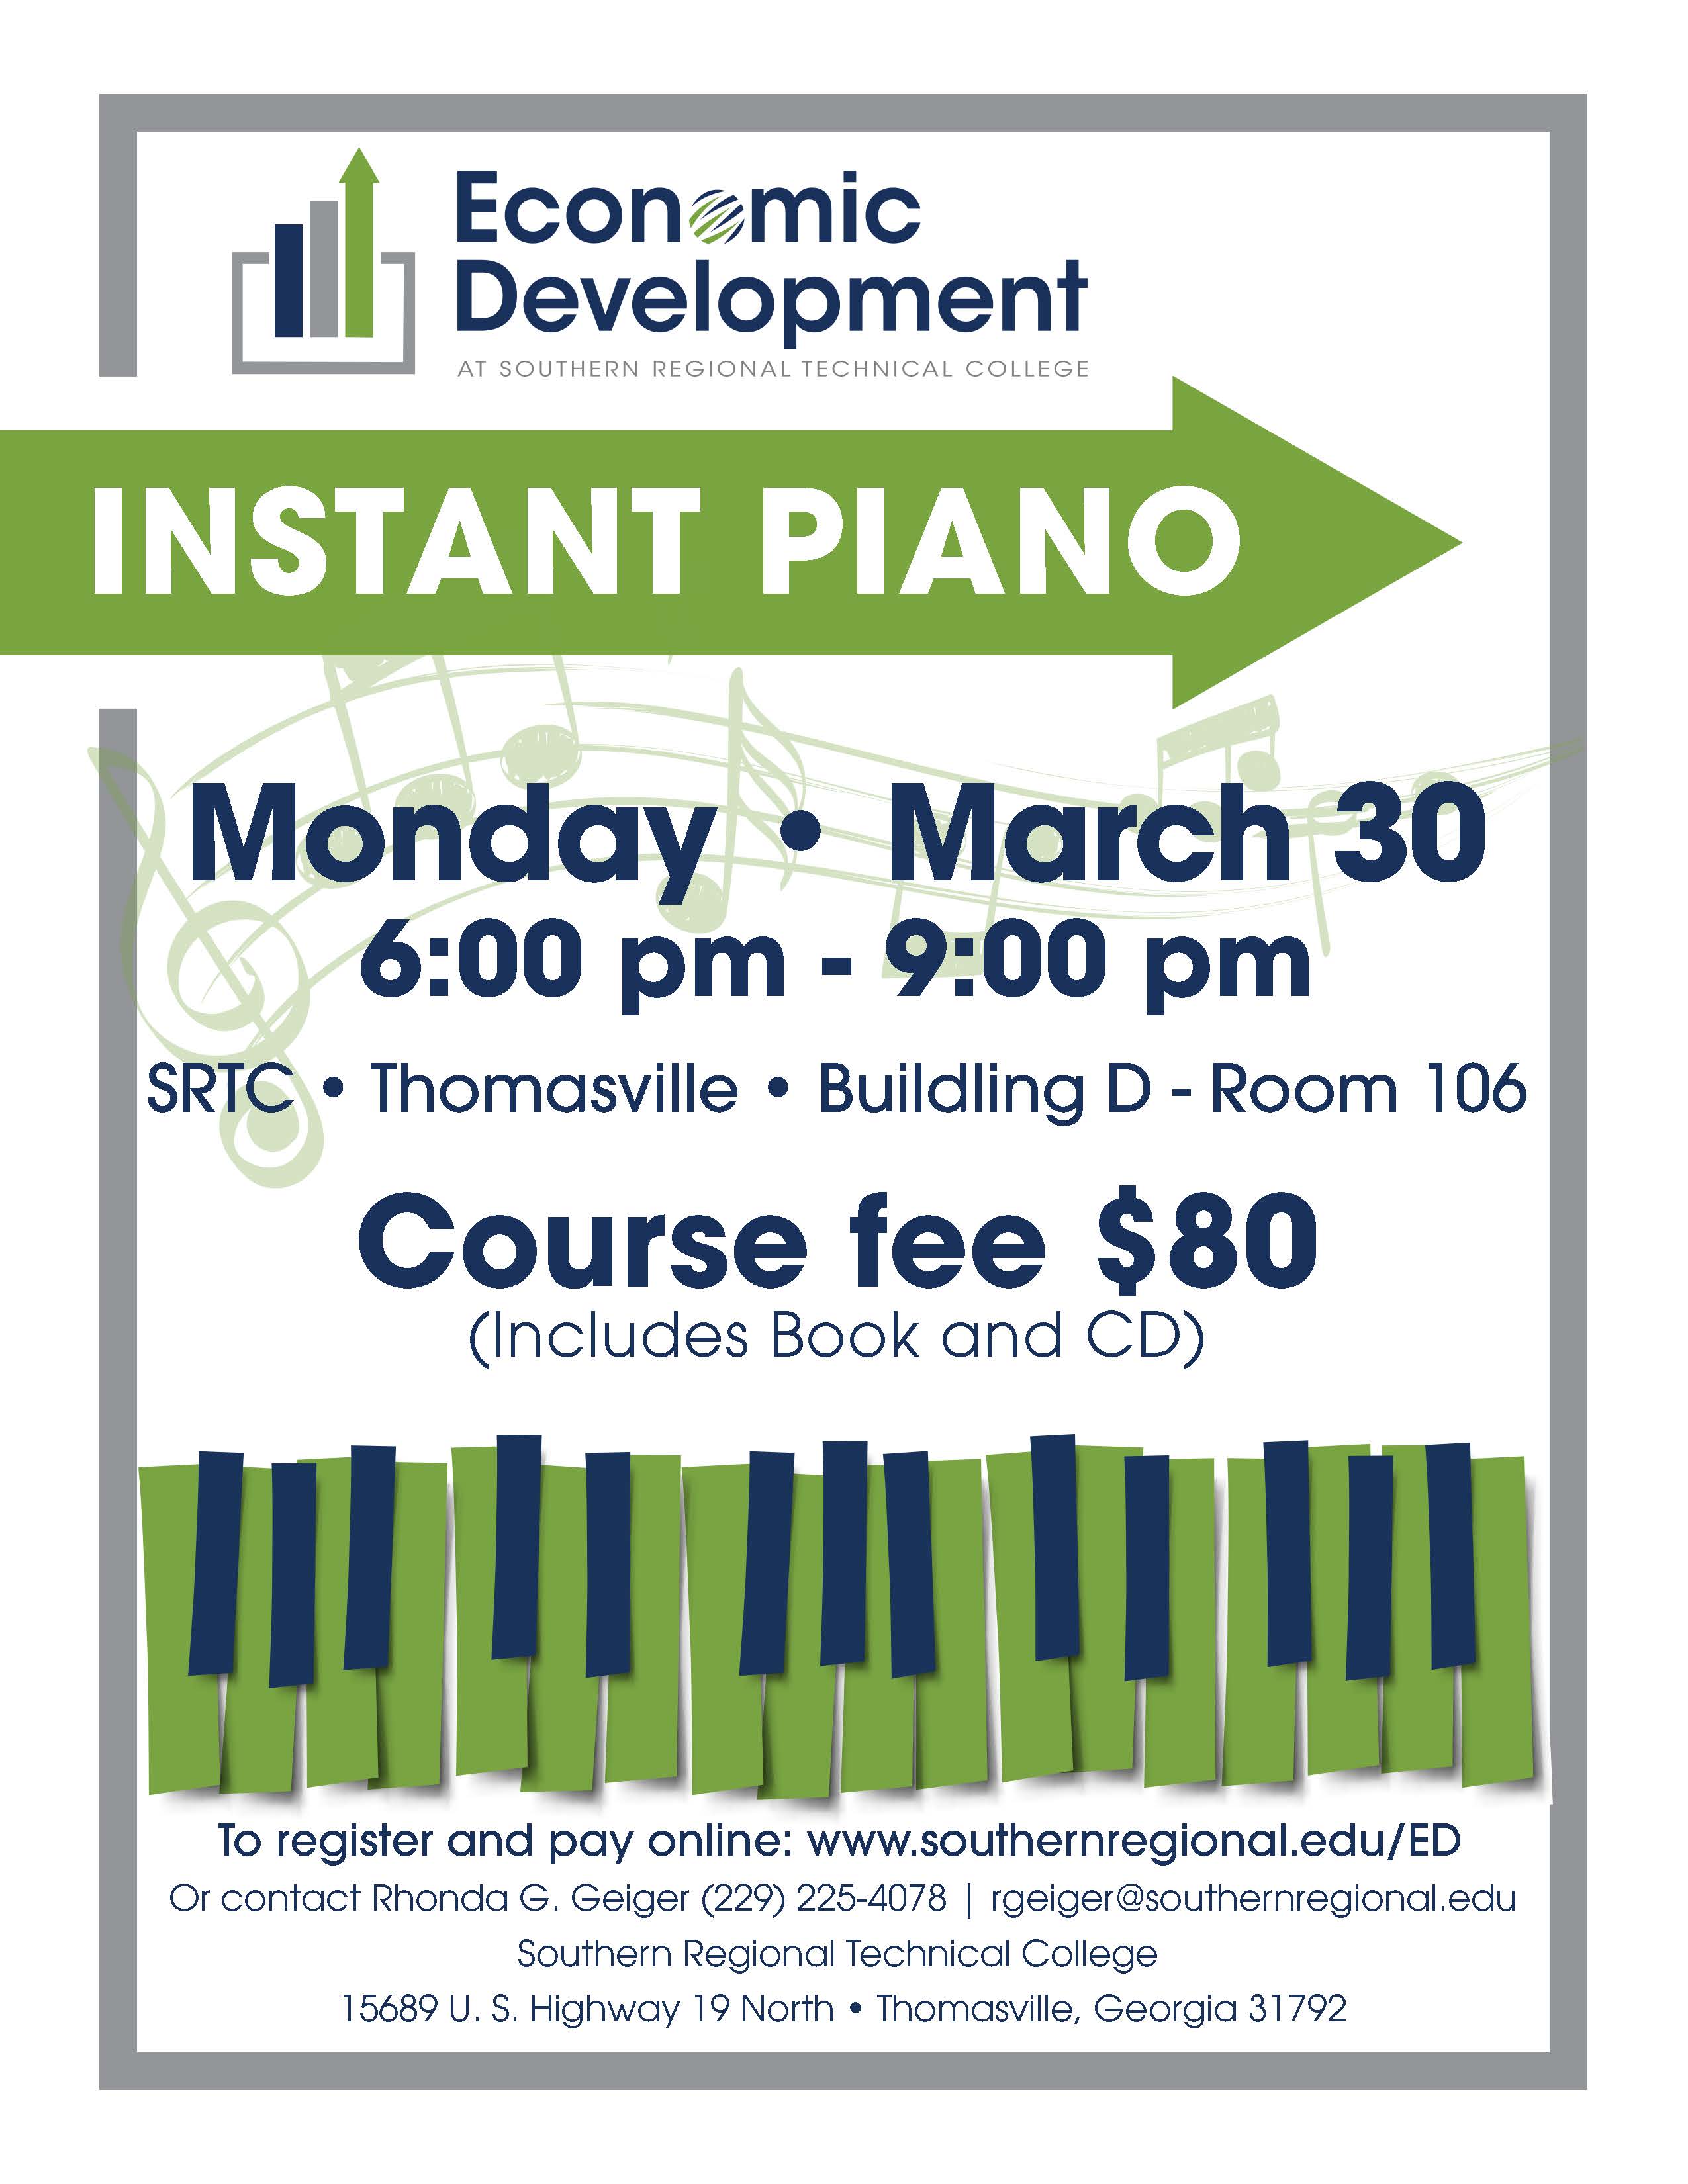 Instant Piano Course Details